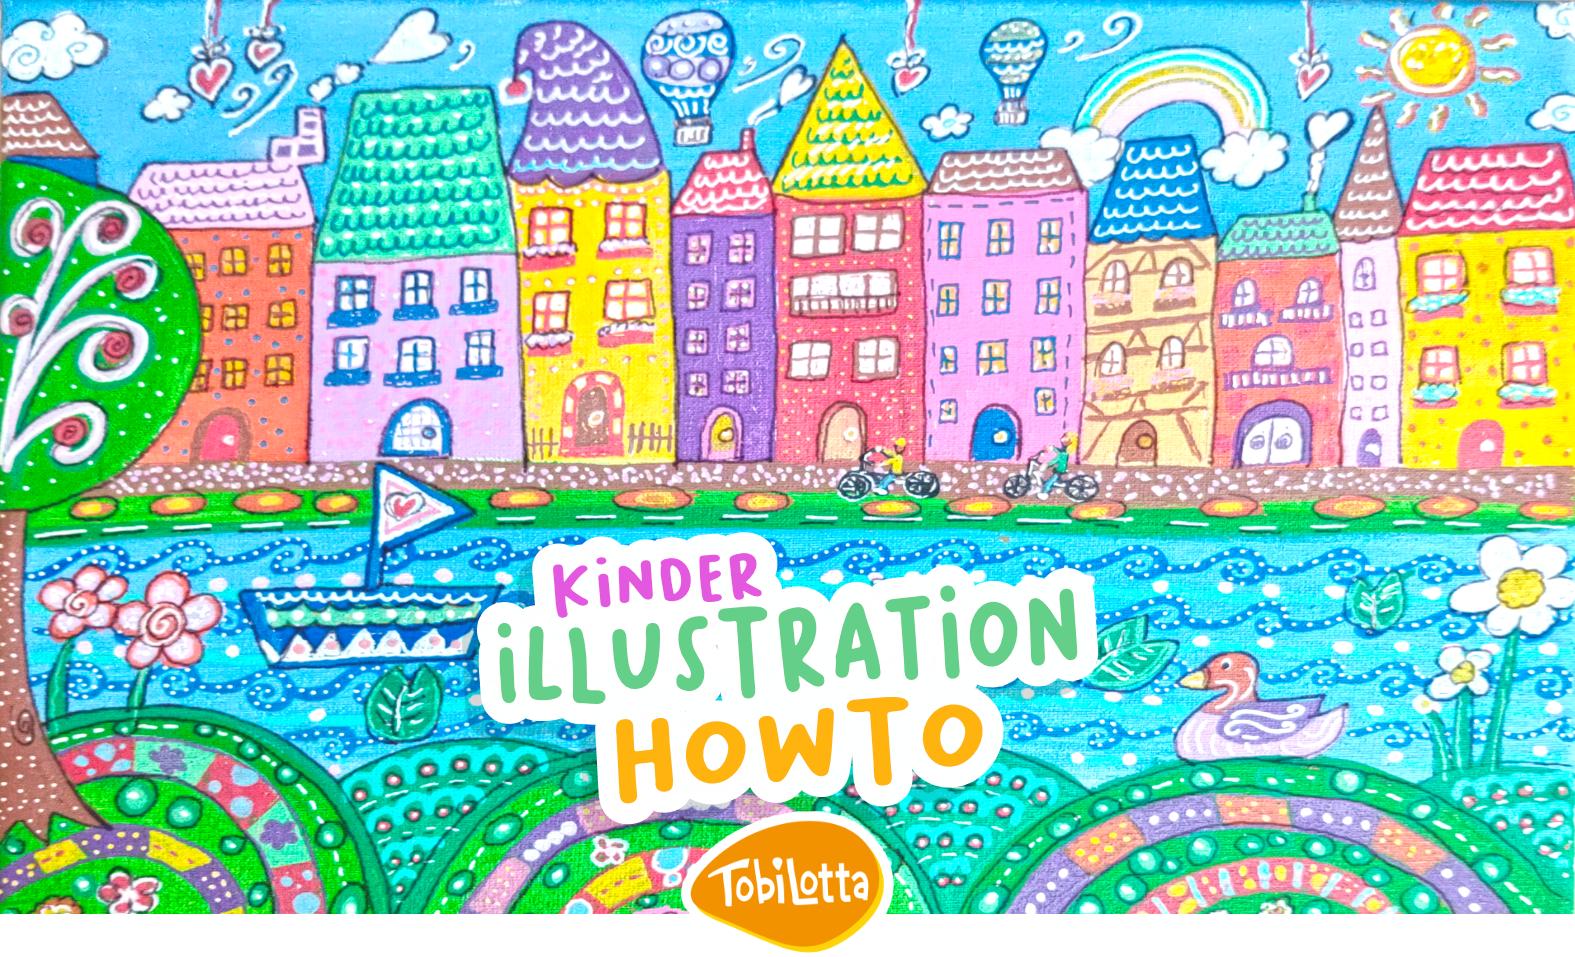 kinderbuch-illustration-how-to-tutorial-Banner-BLOG-kleber-selber-msachen